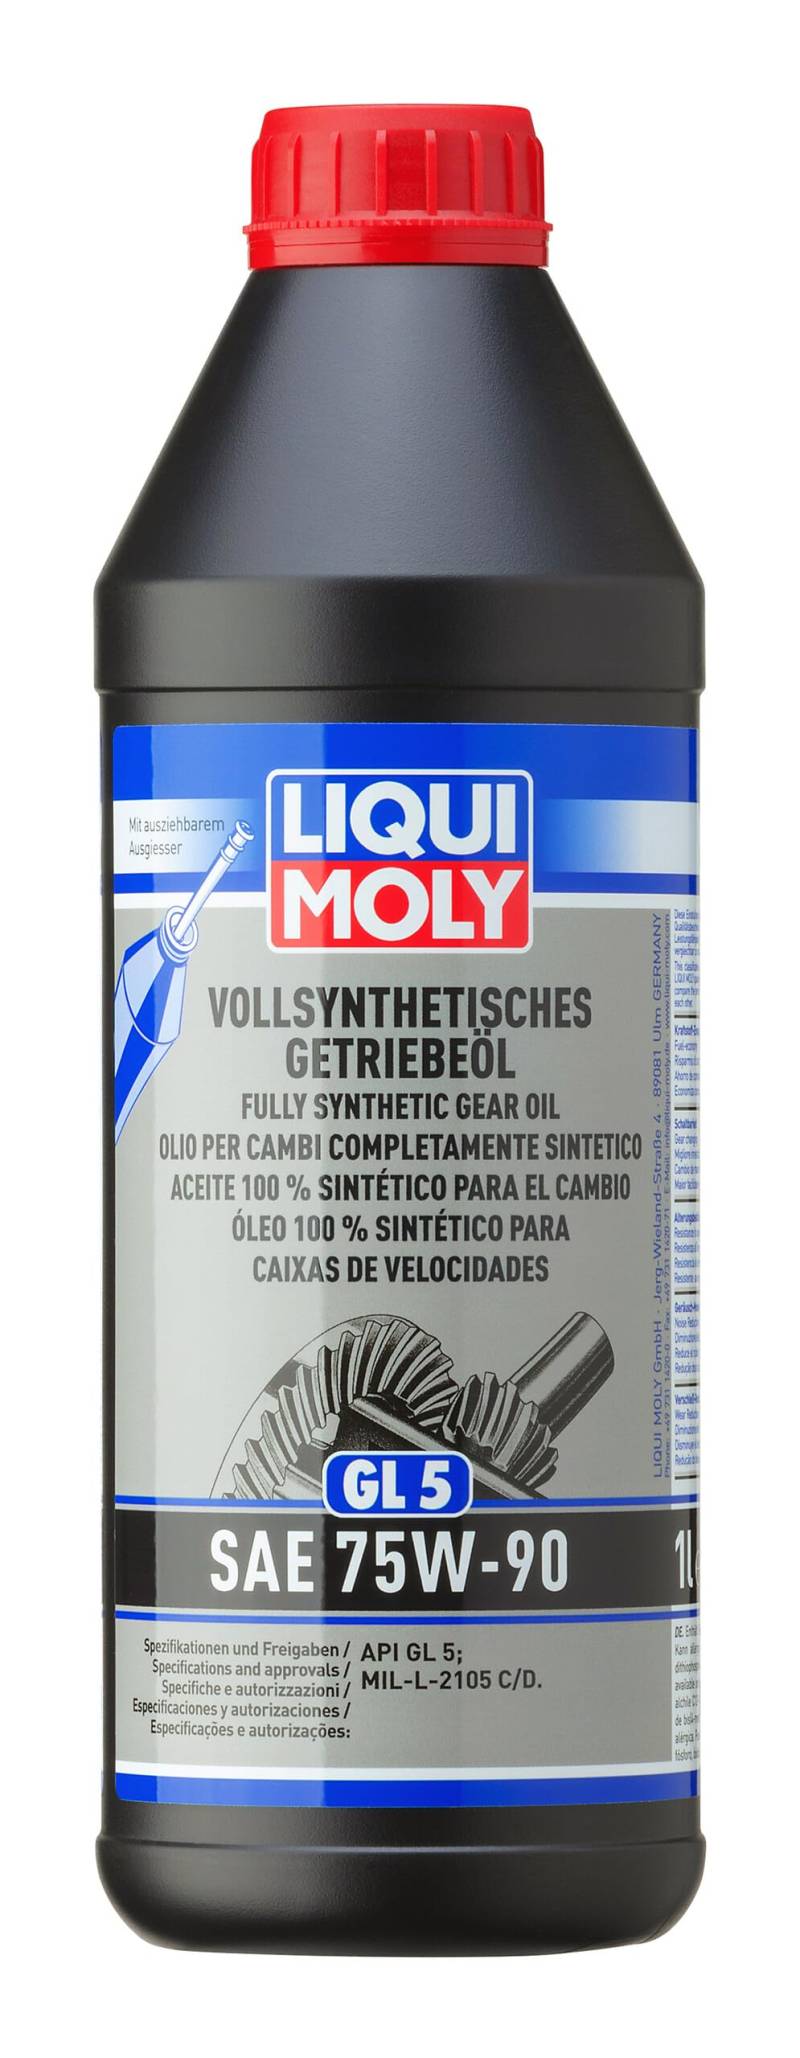 LIQUI MOLY Vollsynthetisches Getriebeöl (GL5) SAE 75W-90 | 1 L | Getriebeöl | Hydrauliköl | Art.-Nr.: 1414 von Liqui Moly